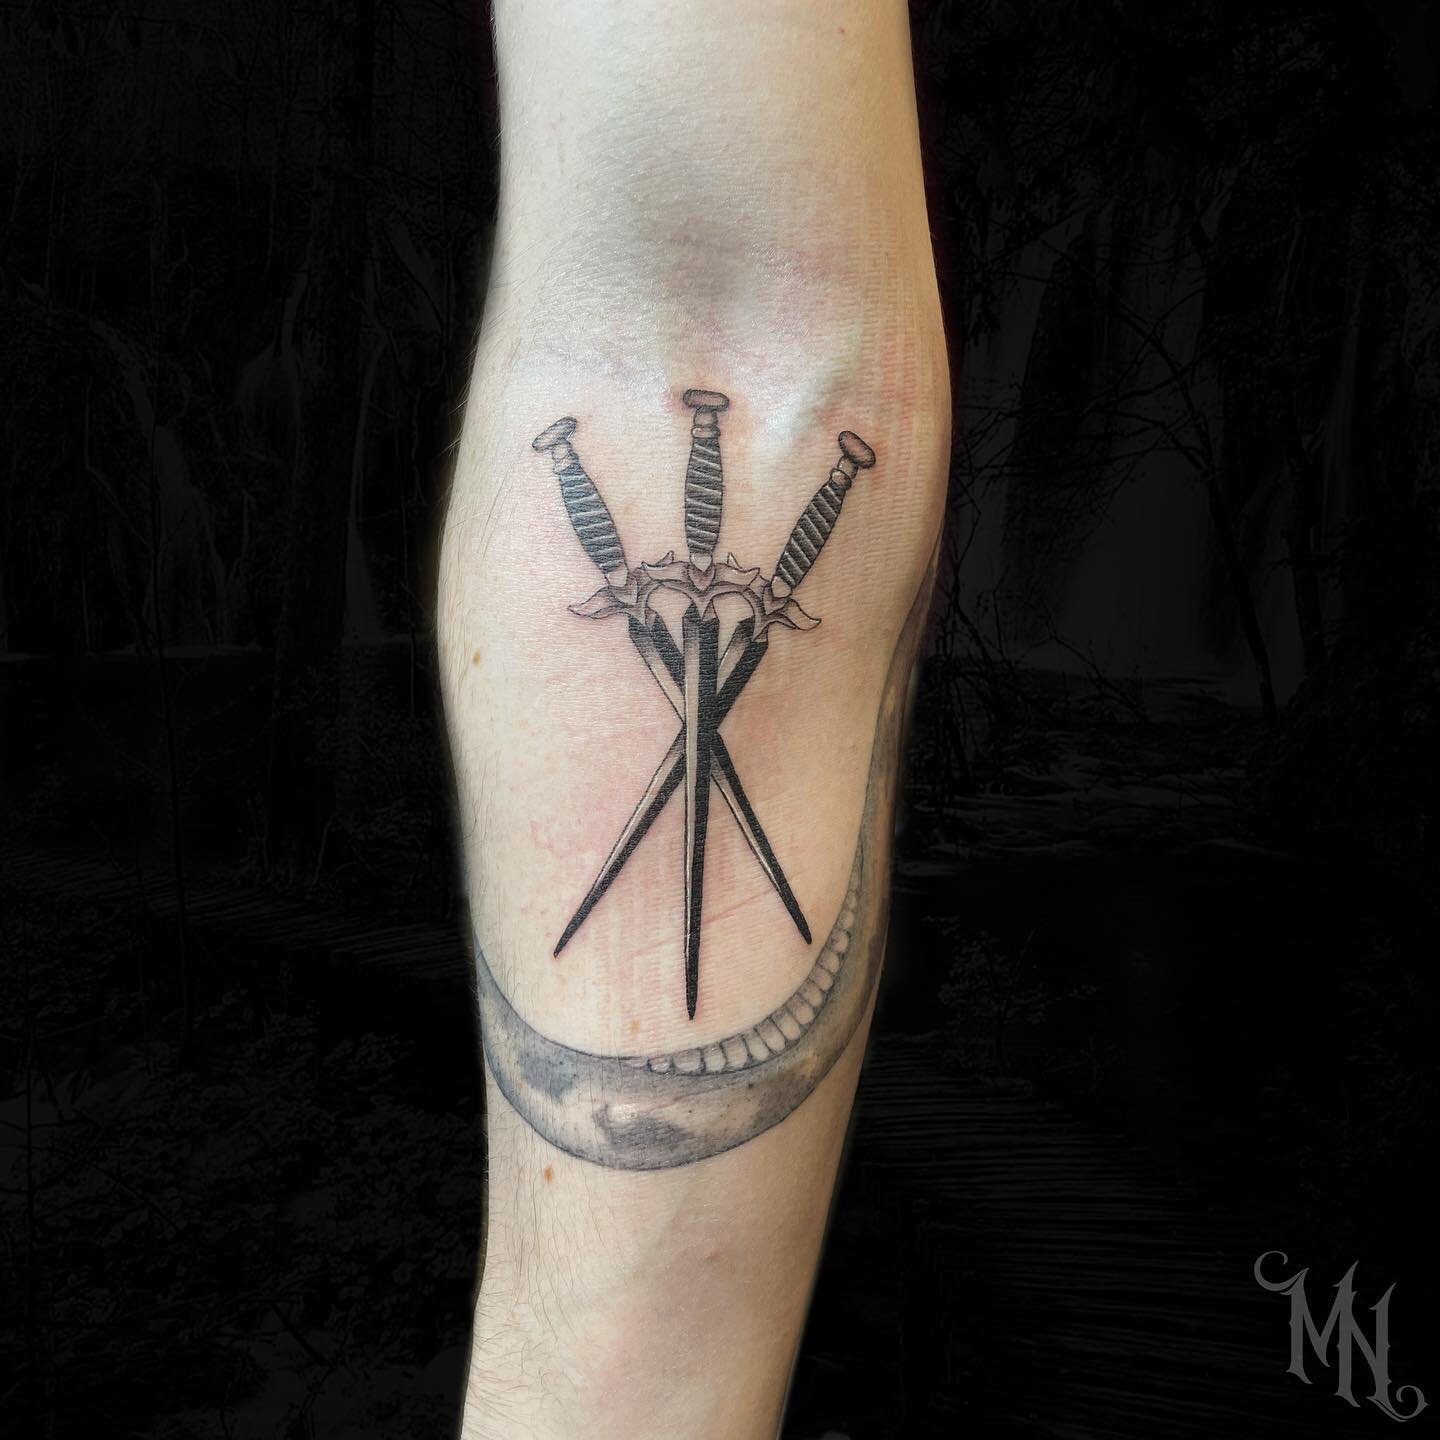 Sword tattoo ⚔️ Call or Text 905-435-7551 for bookings and inquiries #sword #swordstattoo #blackandgreytattoo #whitby #tattooinspiration #tattoo #tattooideas #femaletattooartist